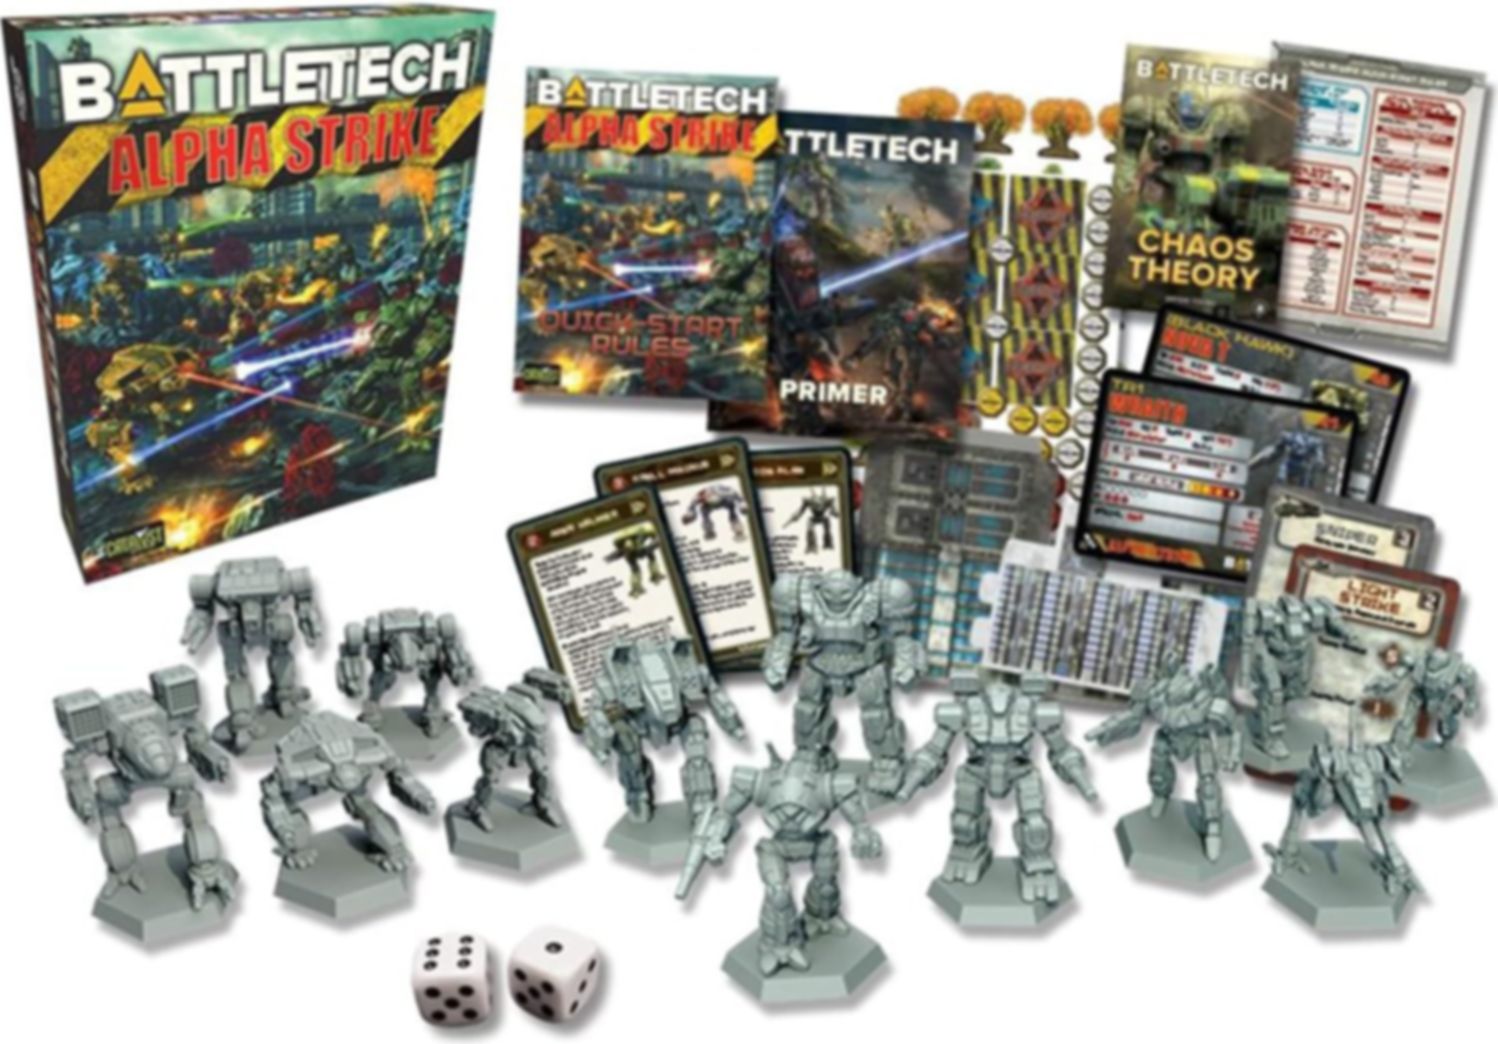 BattleTech: Alpha Strike Boxed Set partes